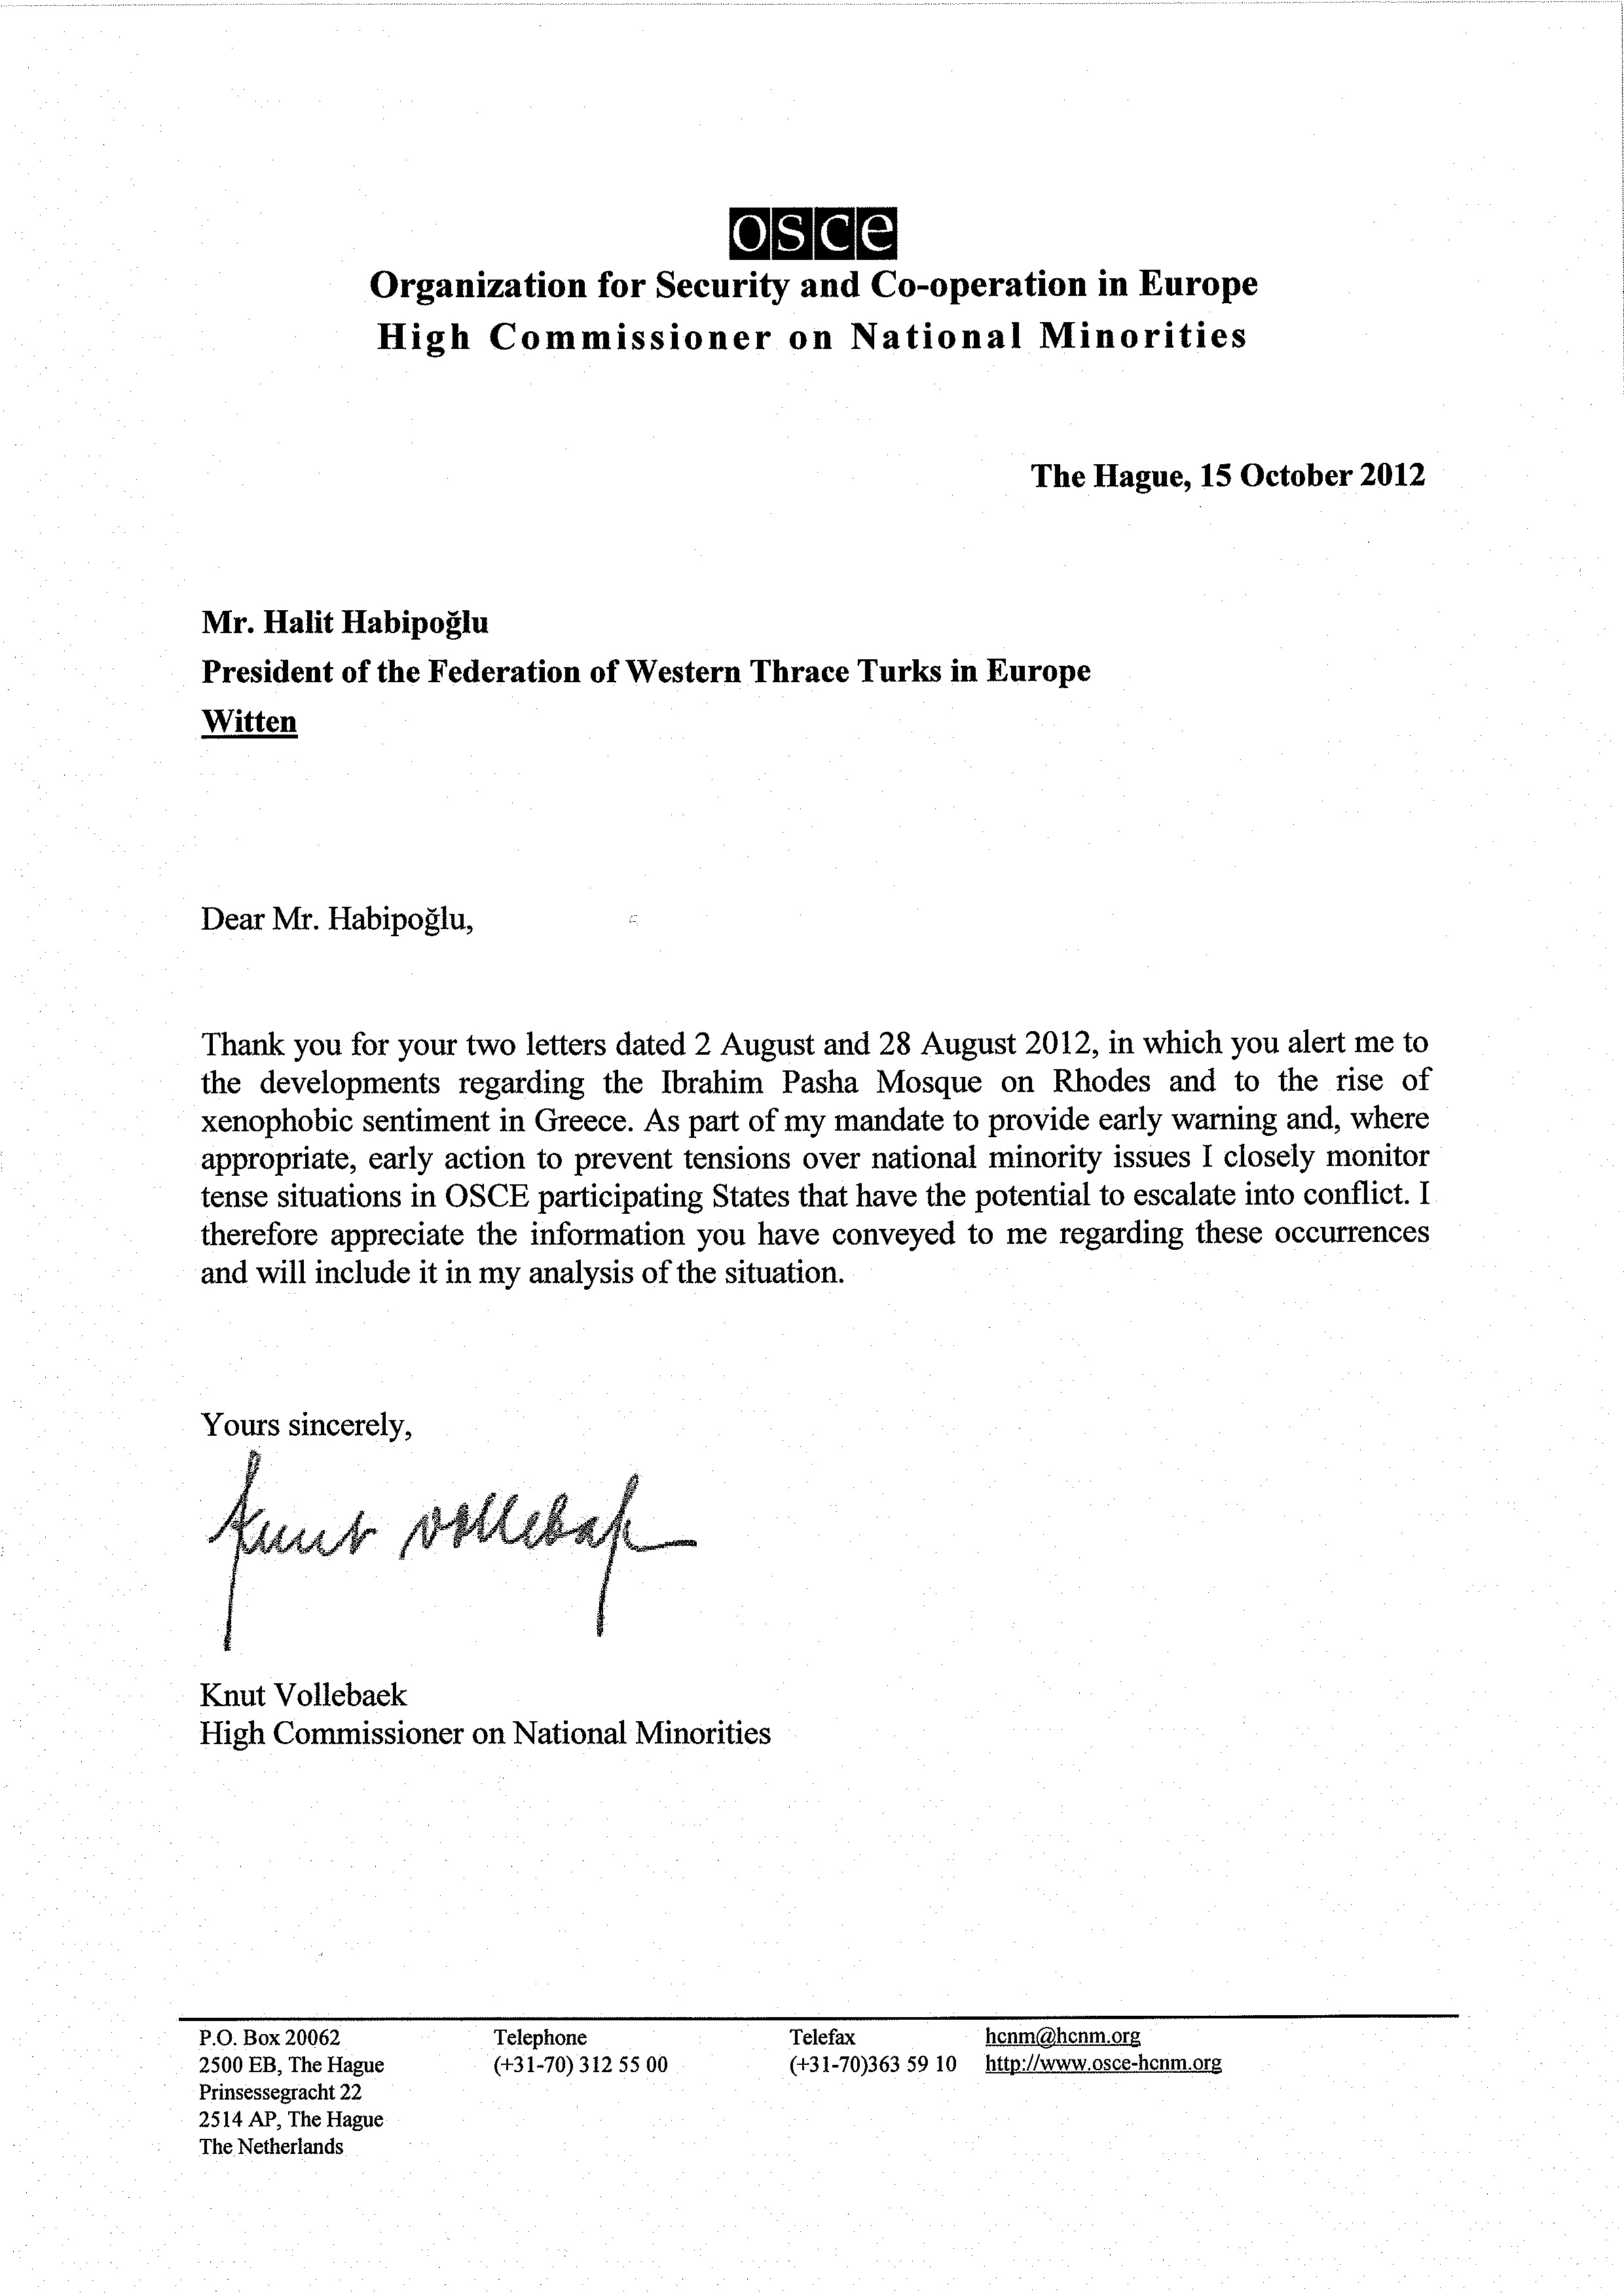 OSCE High Commissioner on National Minorities Knut Vollebaek responds to ABTTF